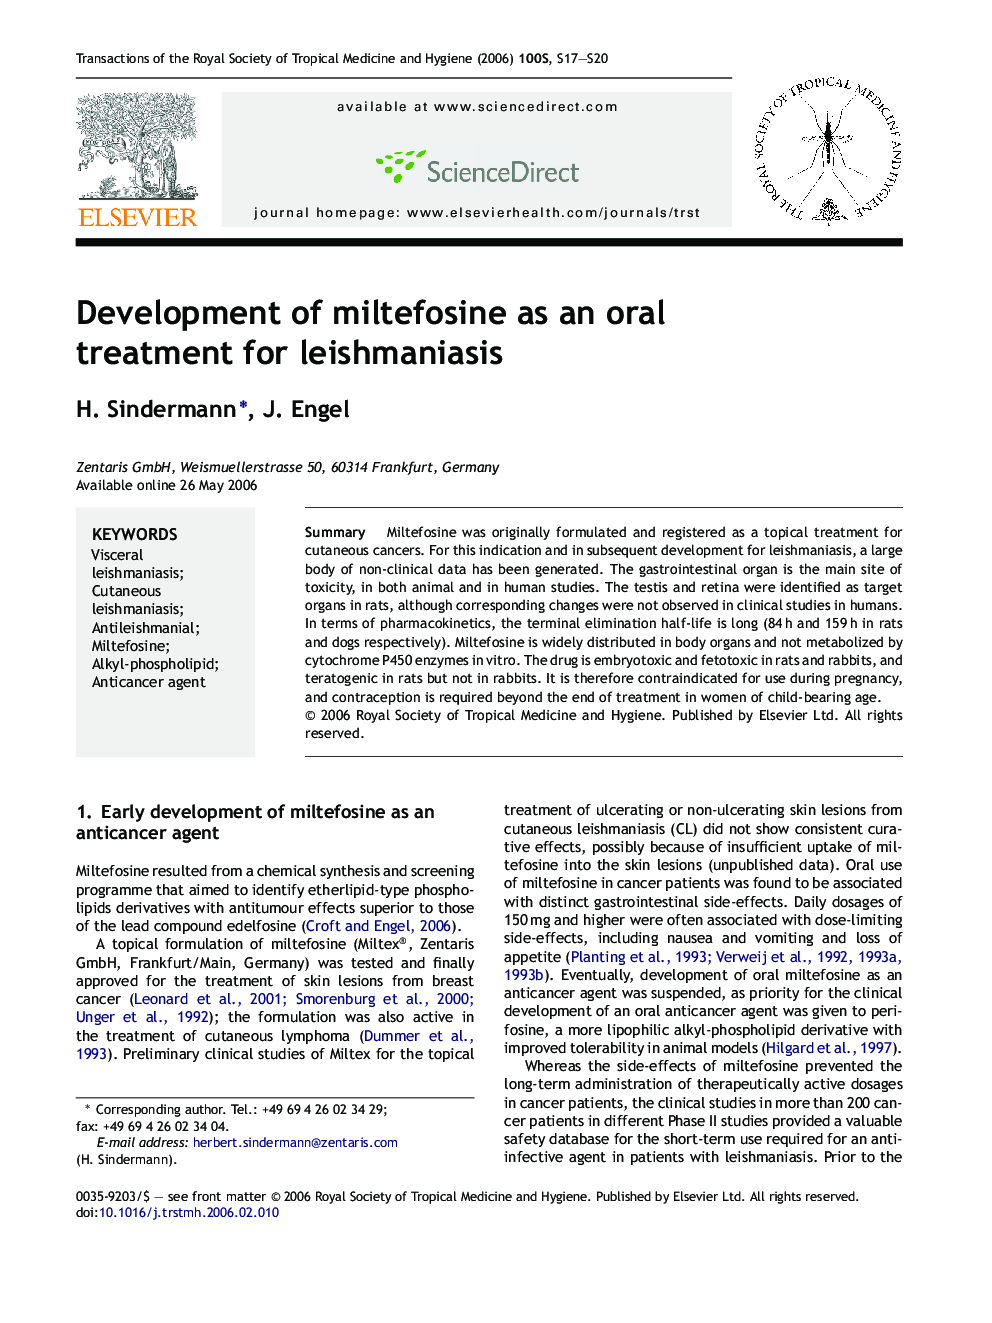 Development of miltefosine as an oral treatment for leishmaniasis